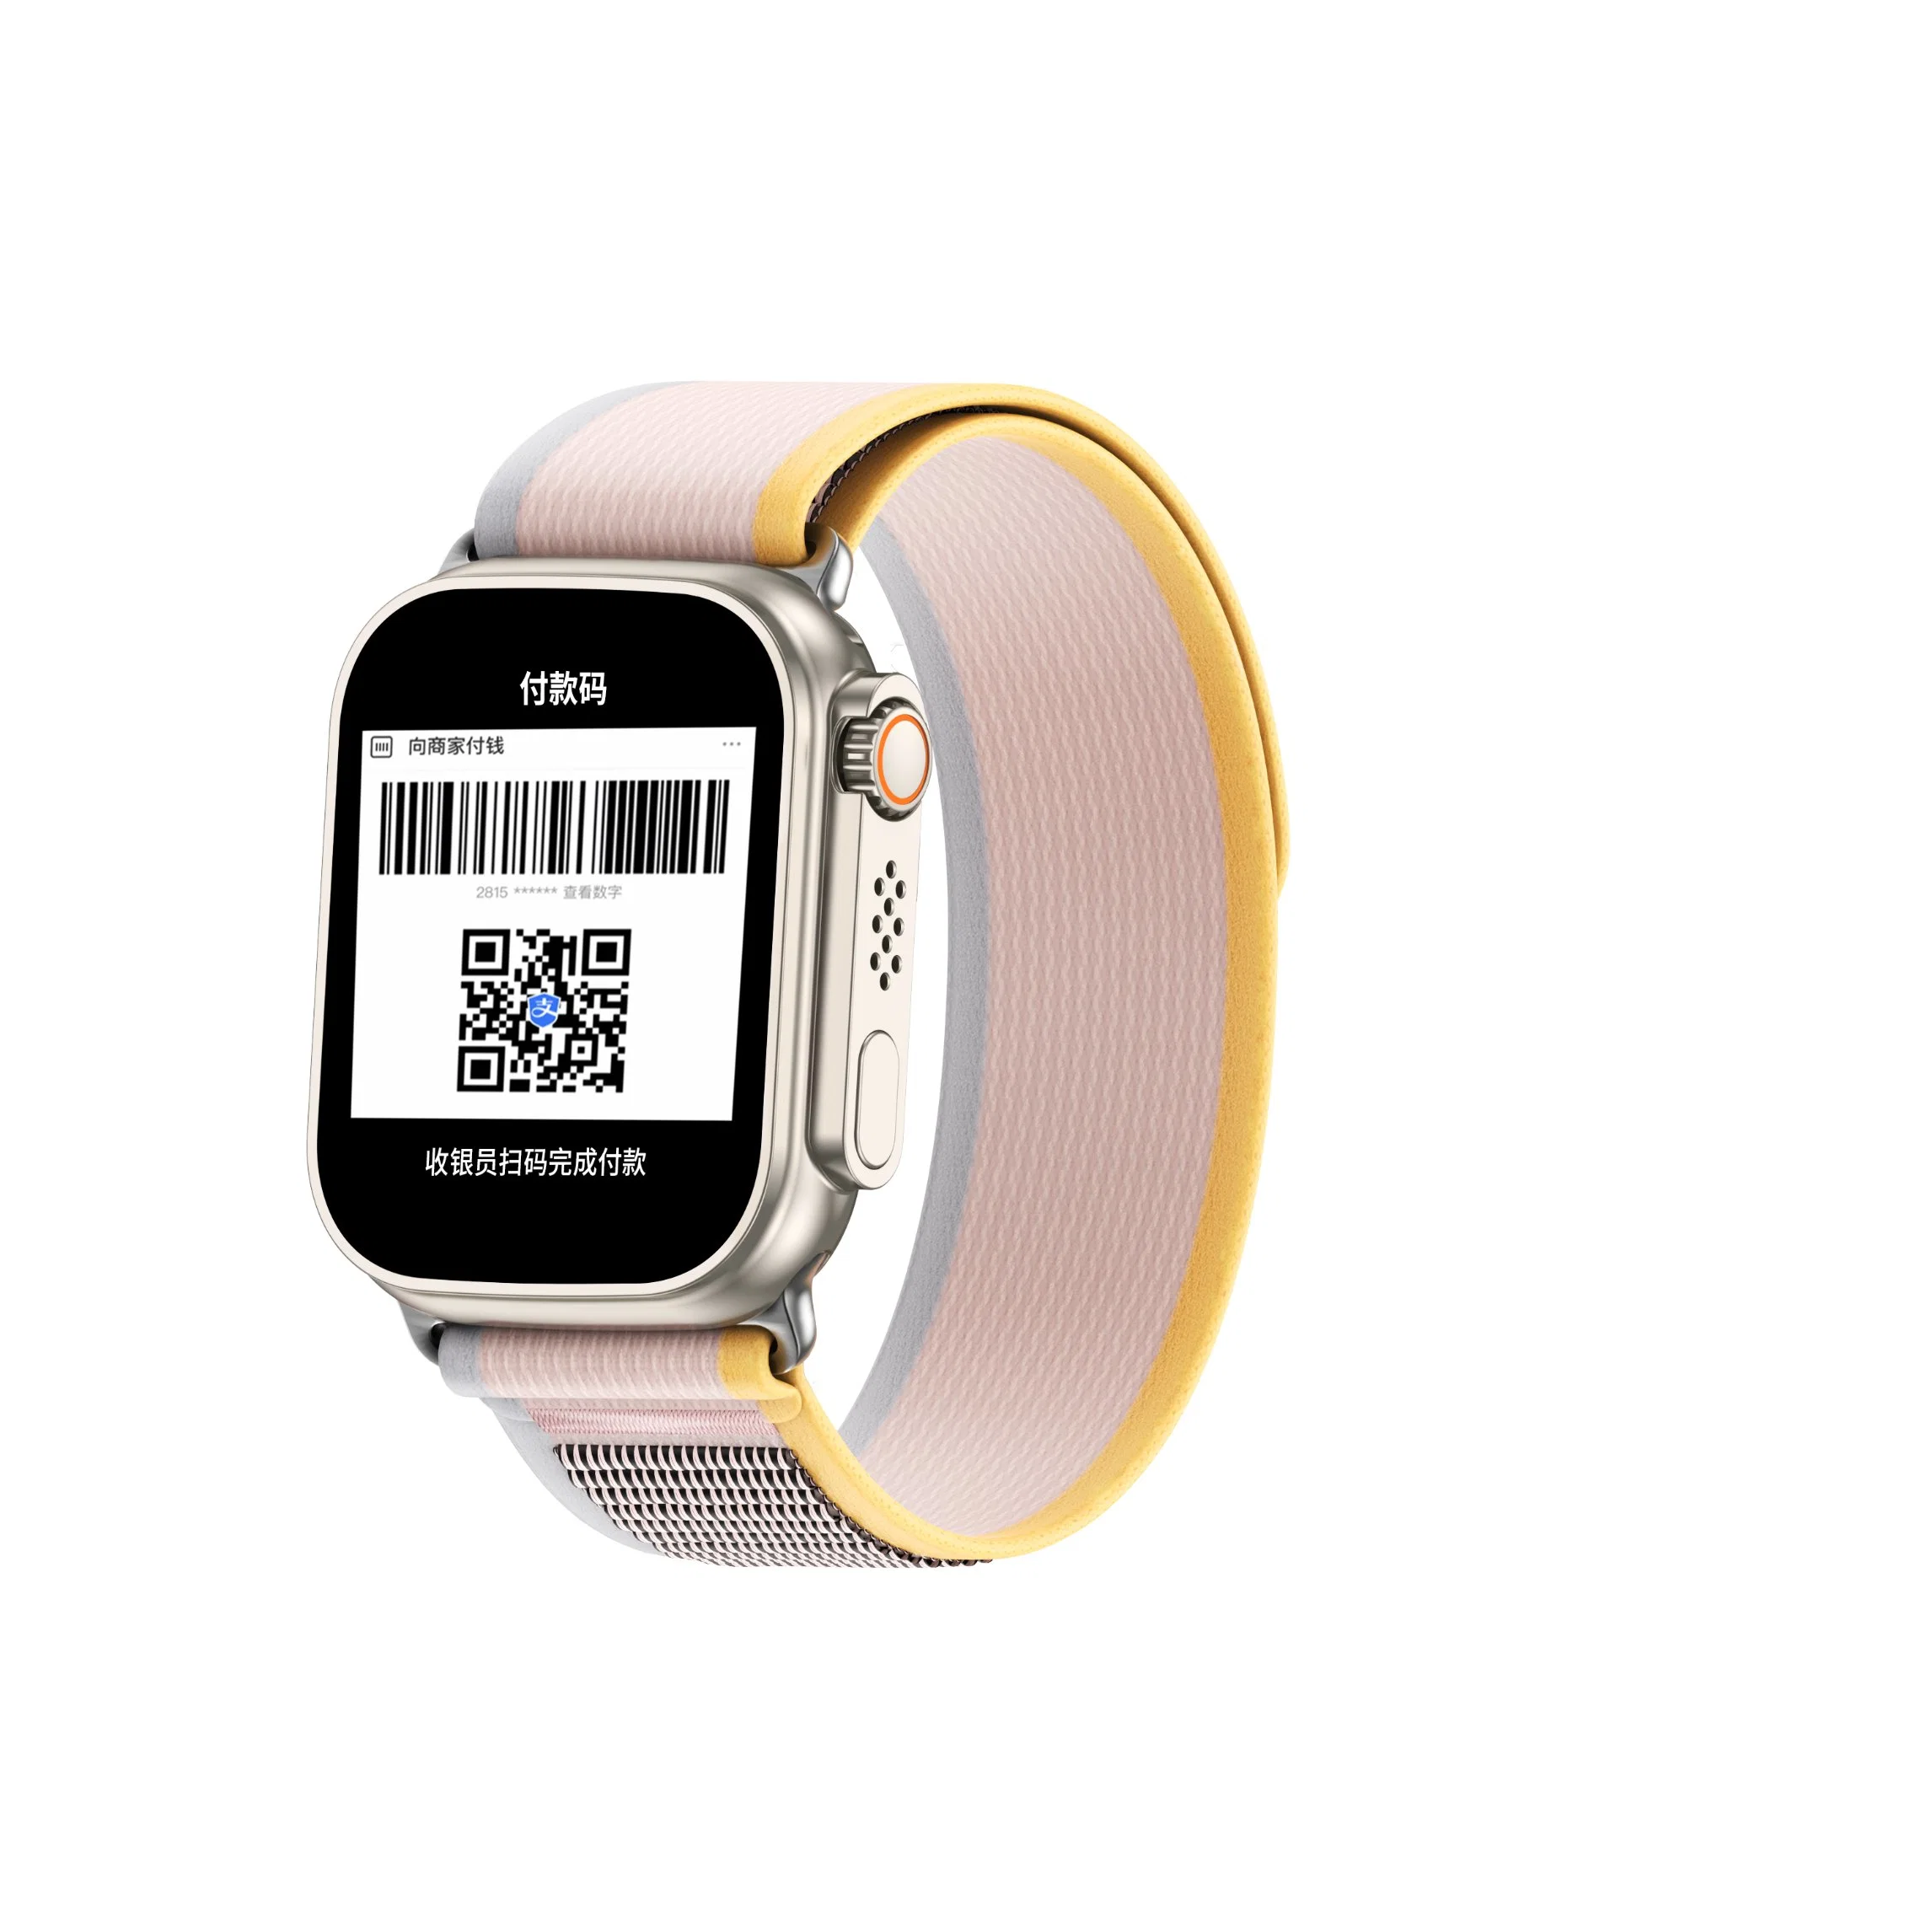 Waterproof Square Smartwatch Waterproof IP67 Fitness Smart Watch Smart Bracelet Evento 4G LTE Mobile Watch